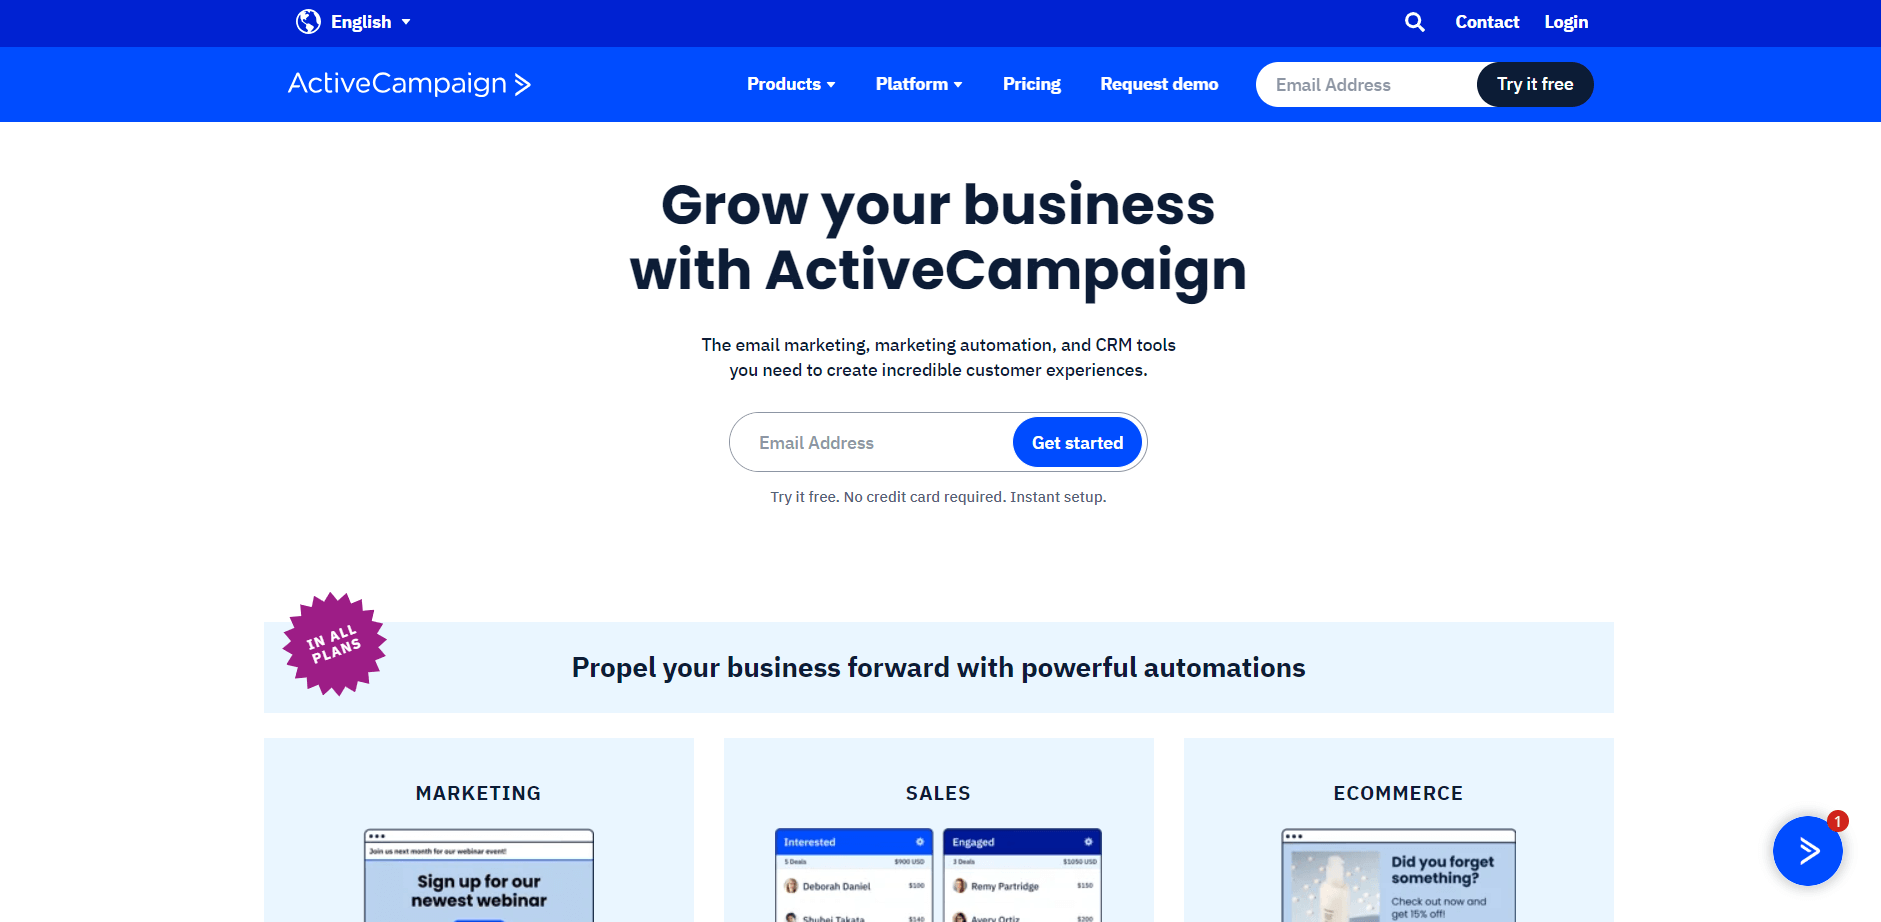 B2B SaaS Landing Page Company Sample: Active Campaign